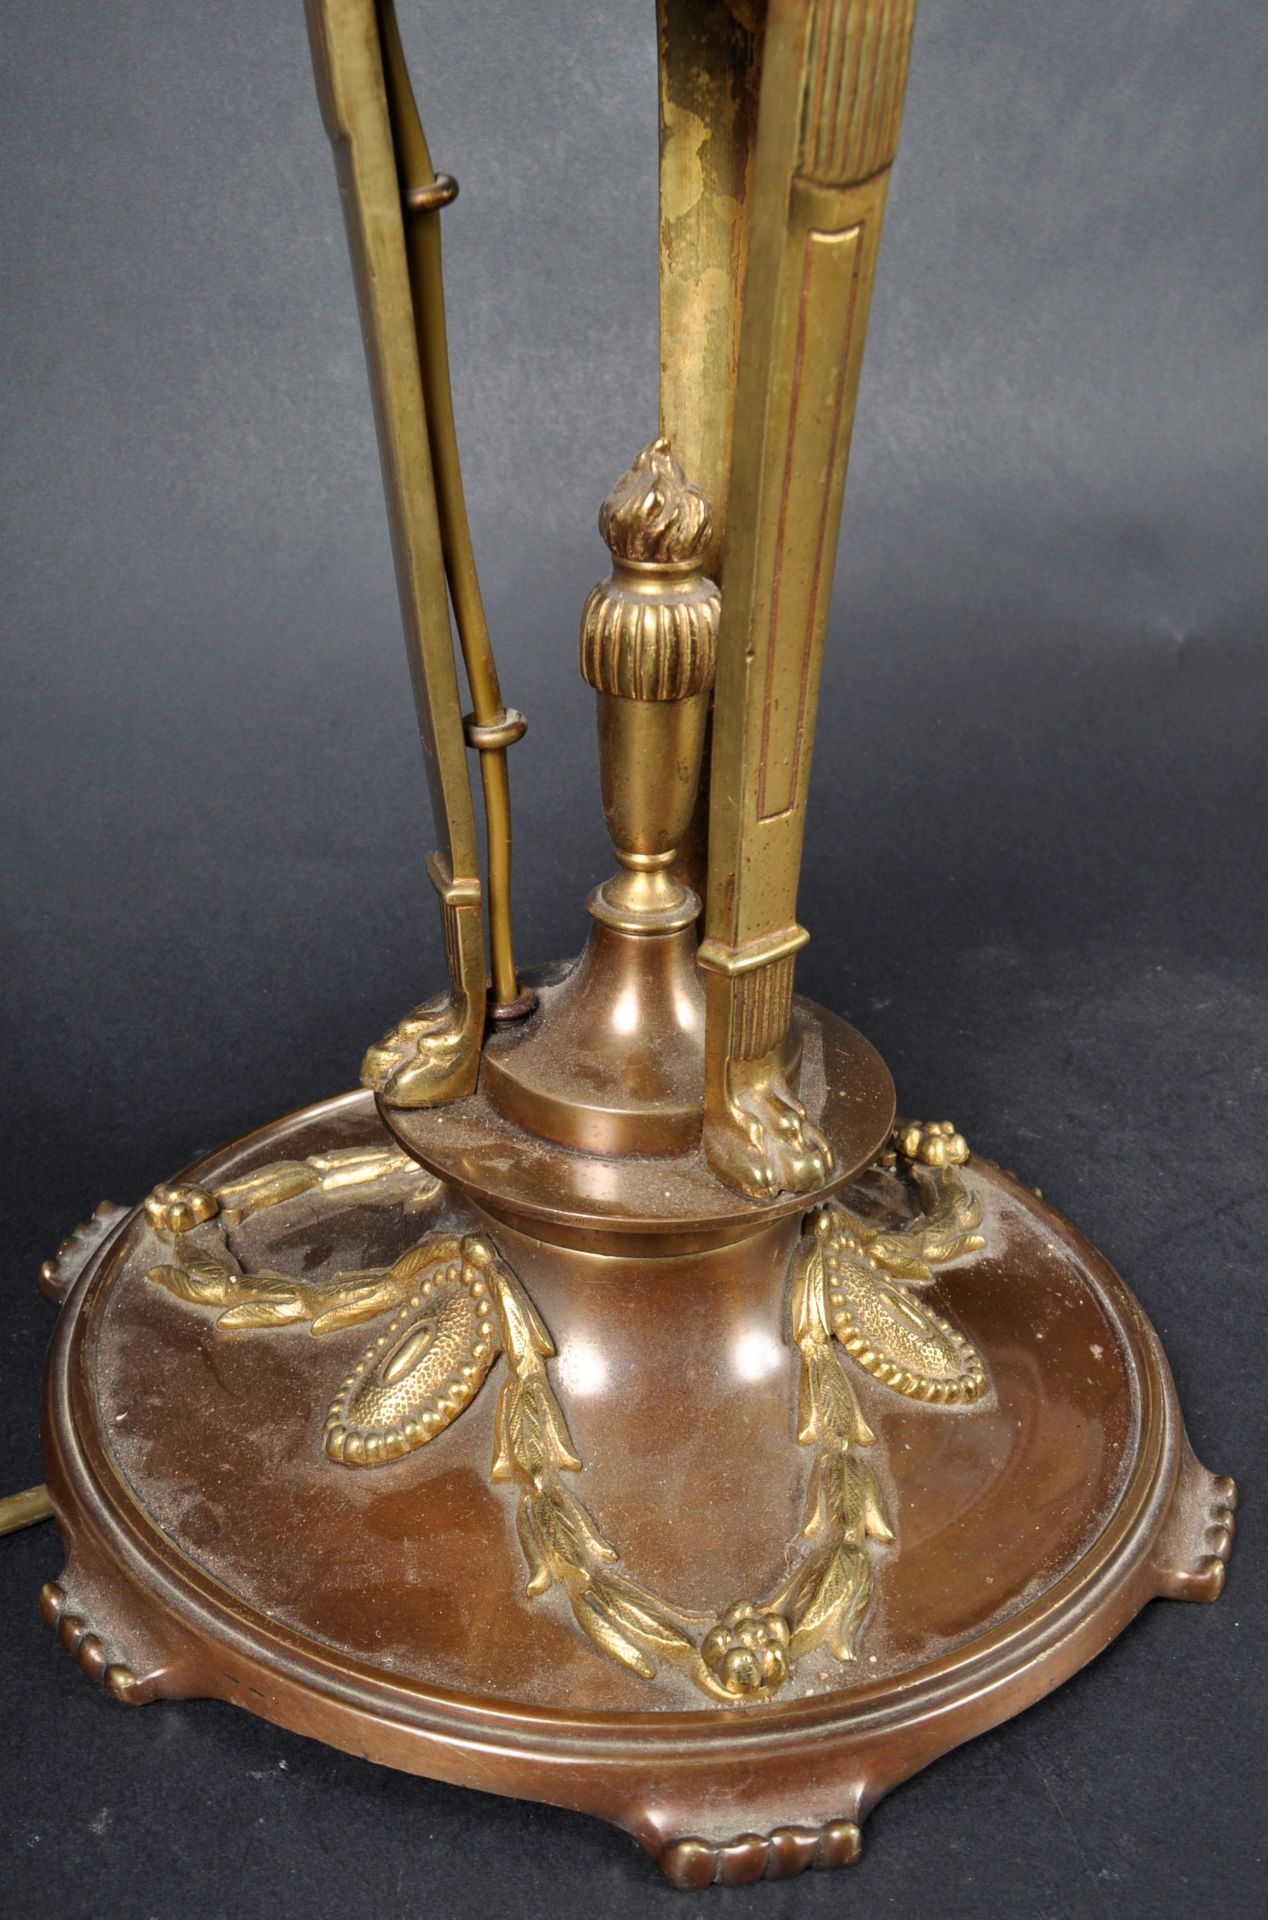 EDWARDIAN BRONZE AND ORMOLU DESK LAMP - Image 6 of 6